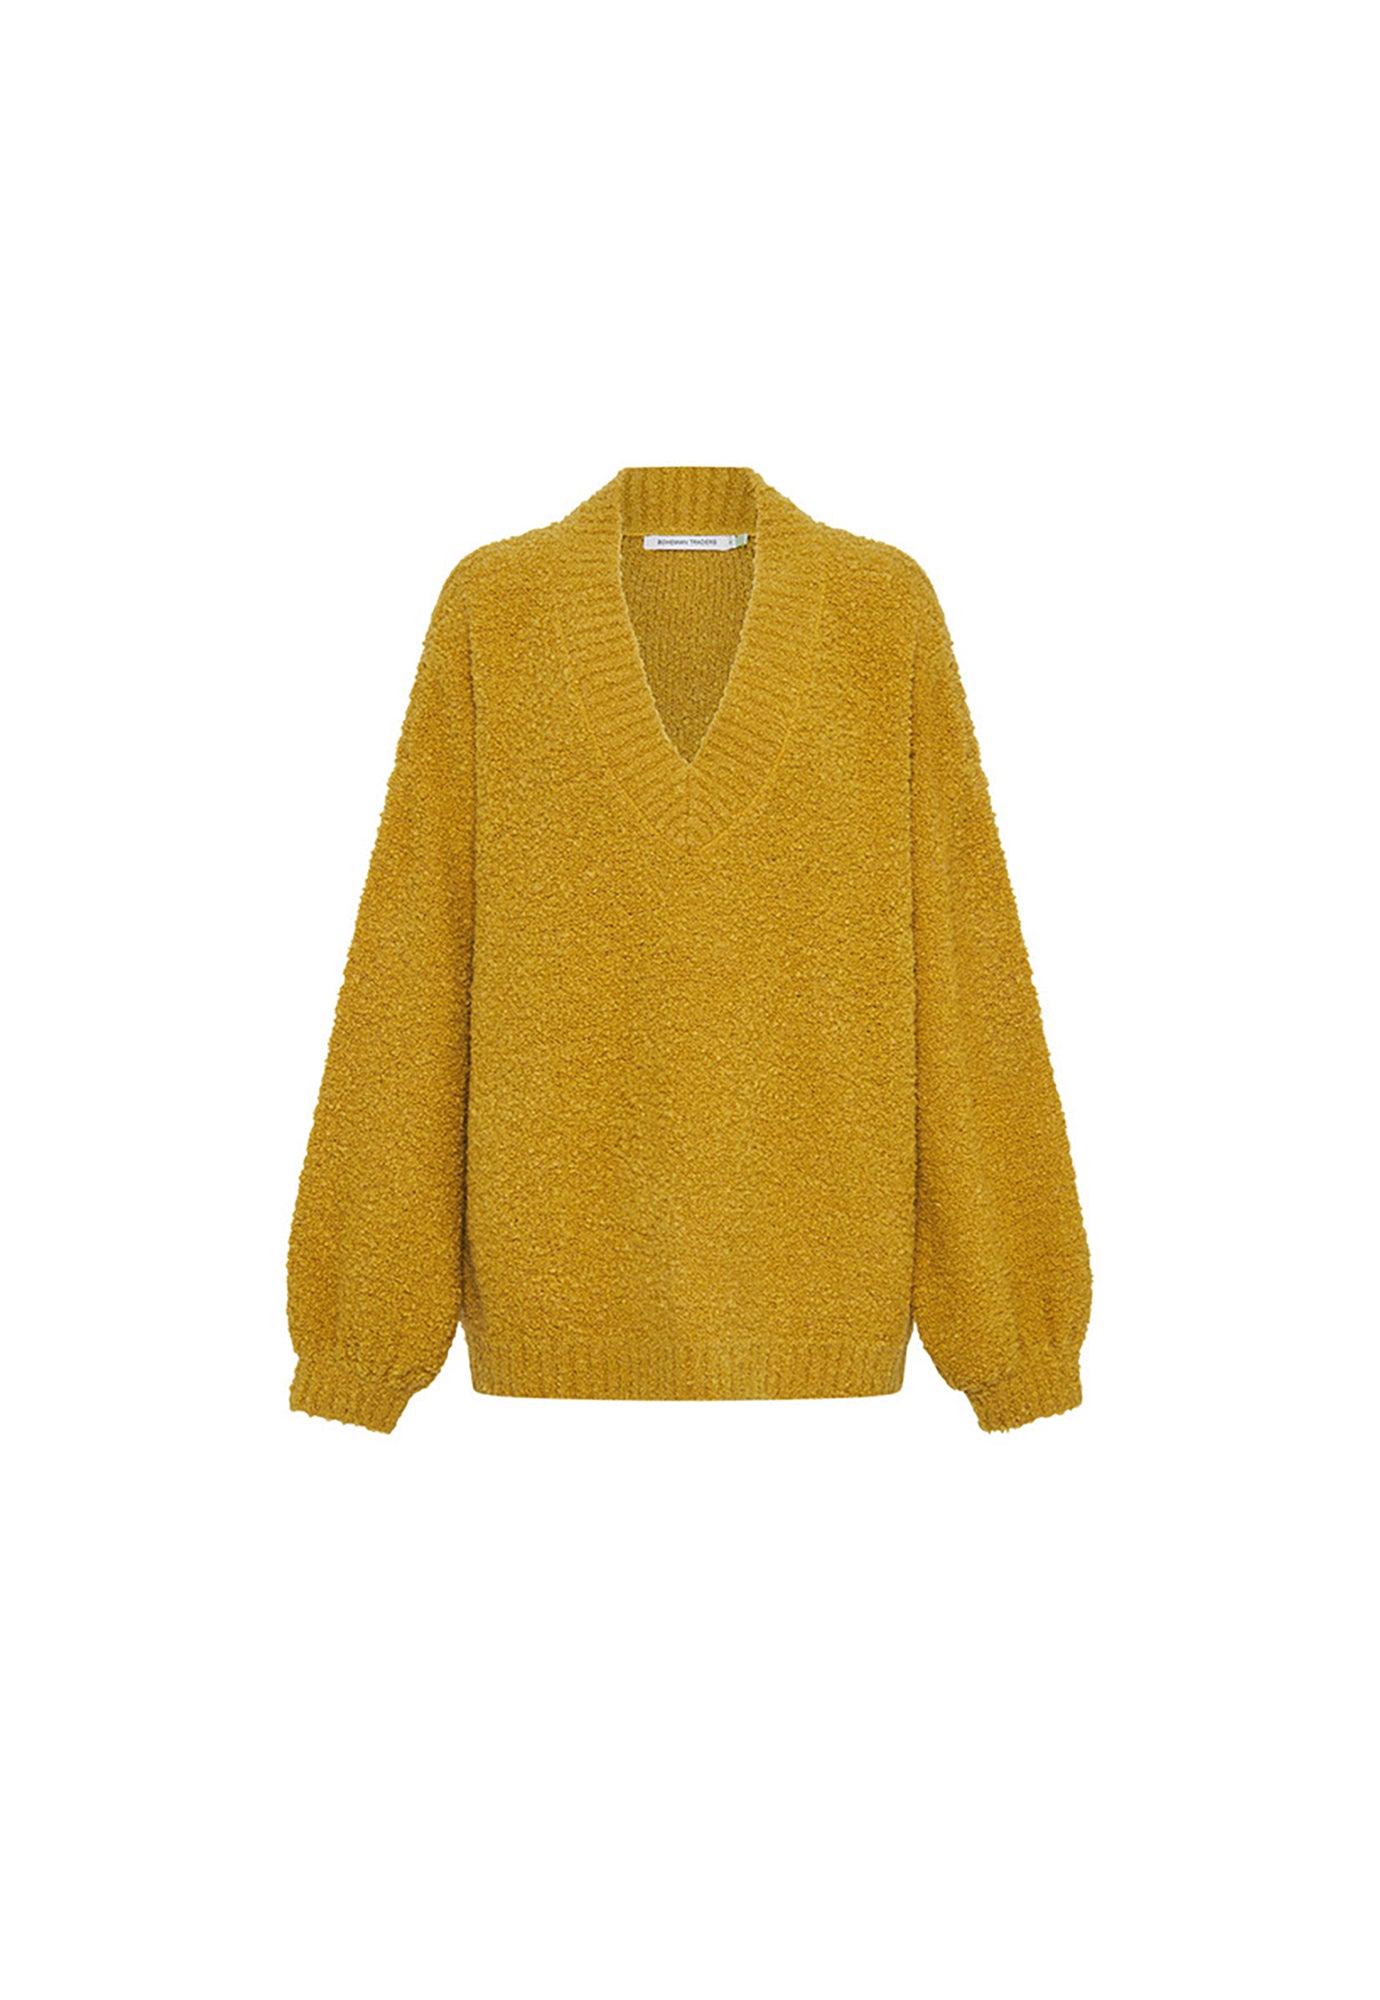 bohemian traders - v neck sweater - citrus